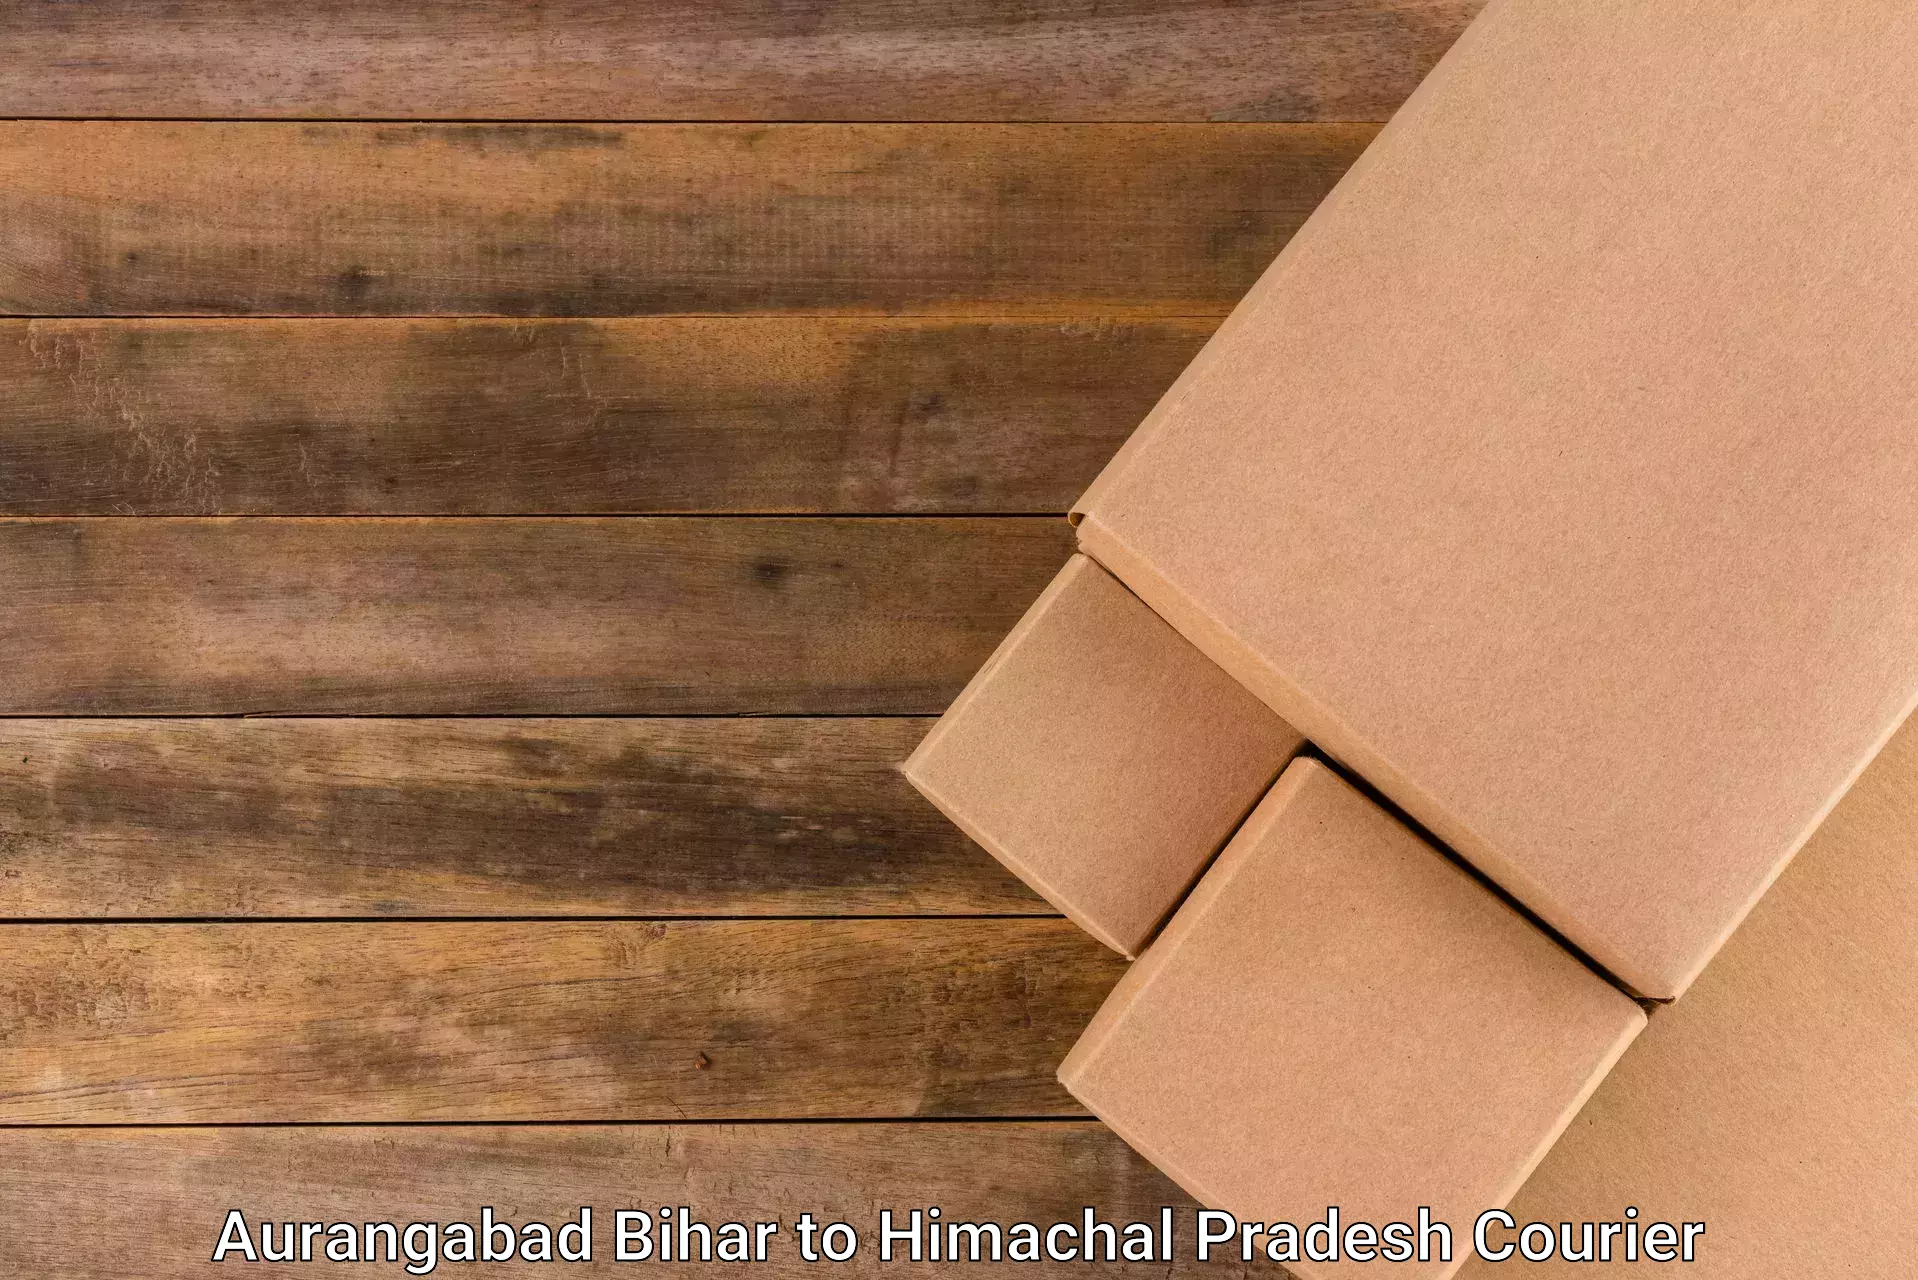 Multi-service courier options Aurangabad Bihar to Sujanpur